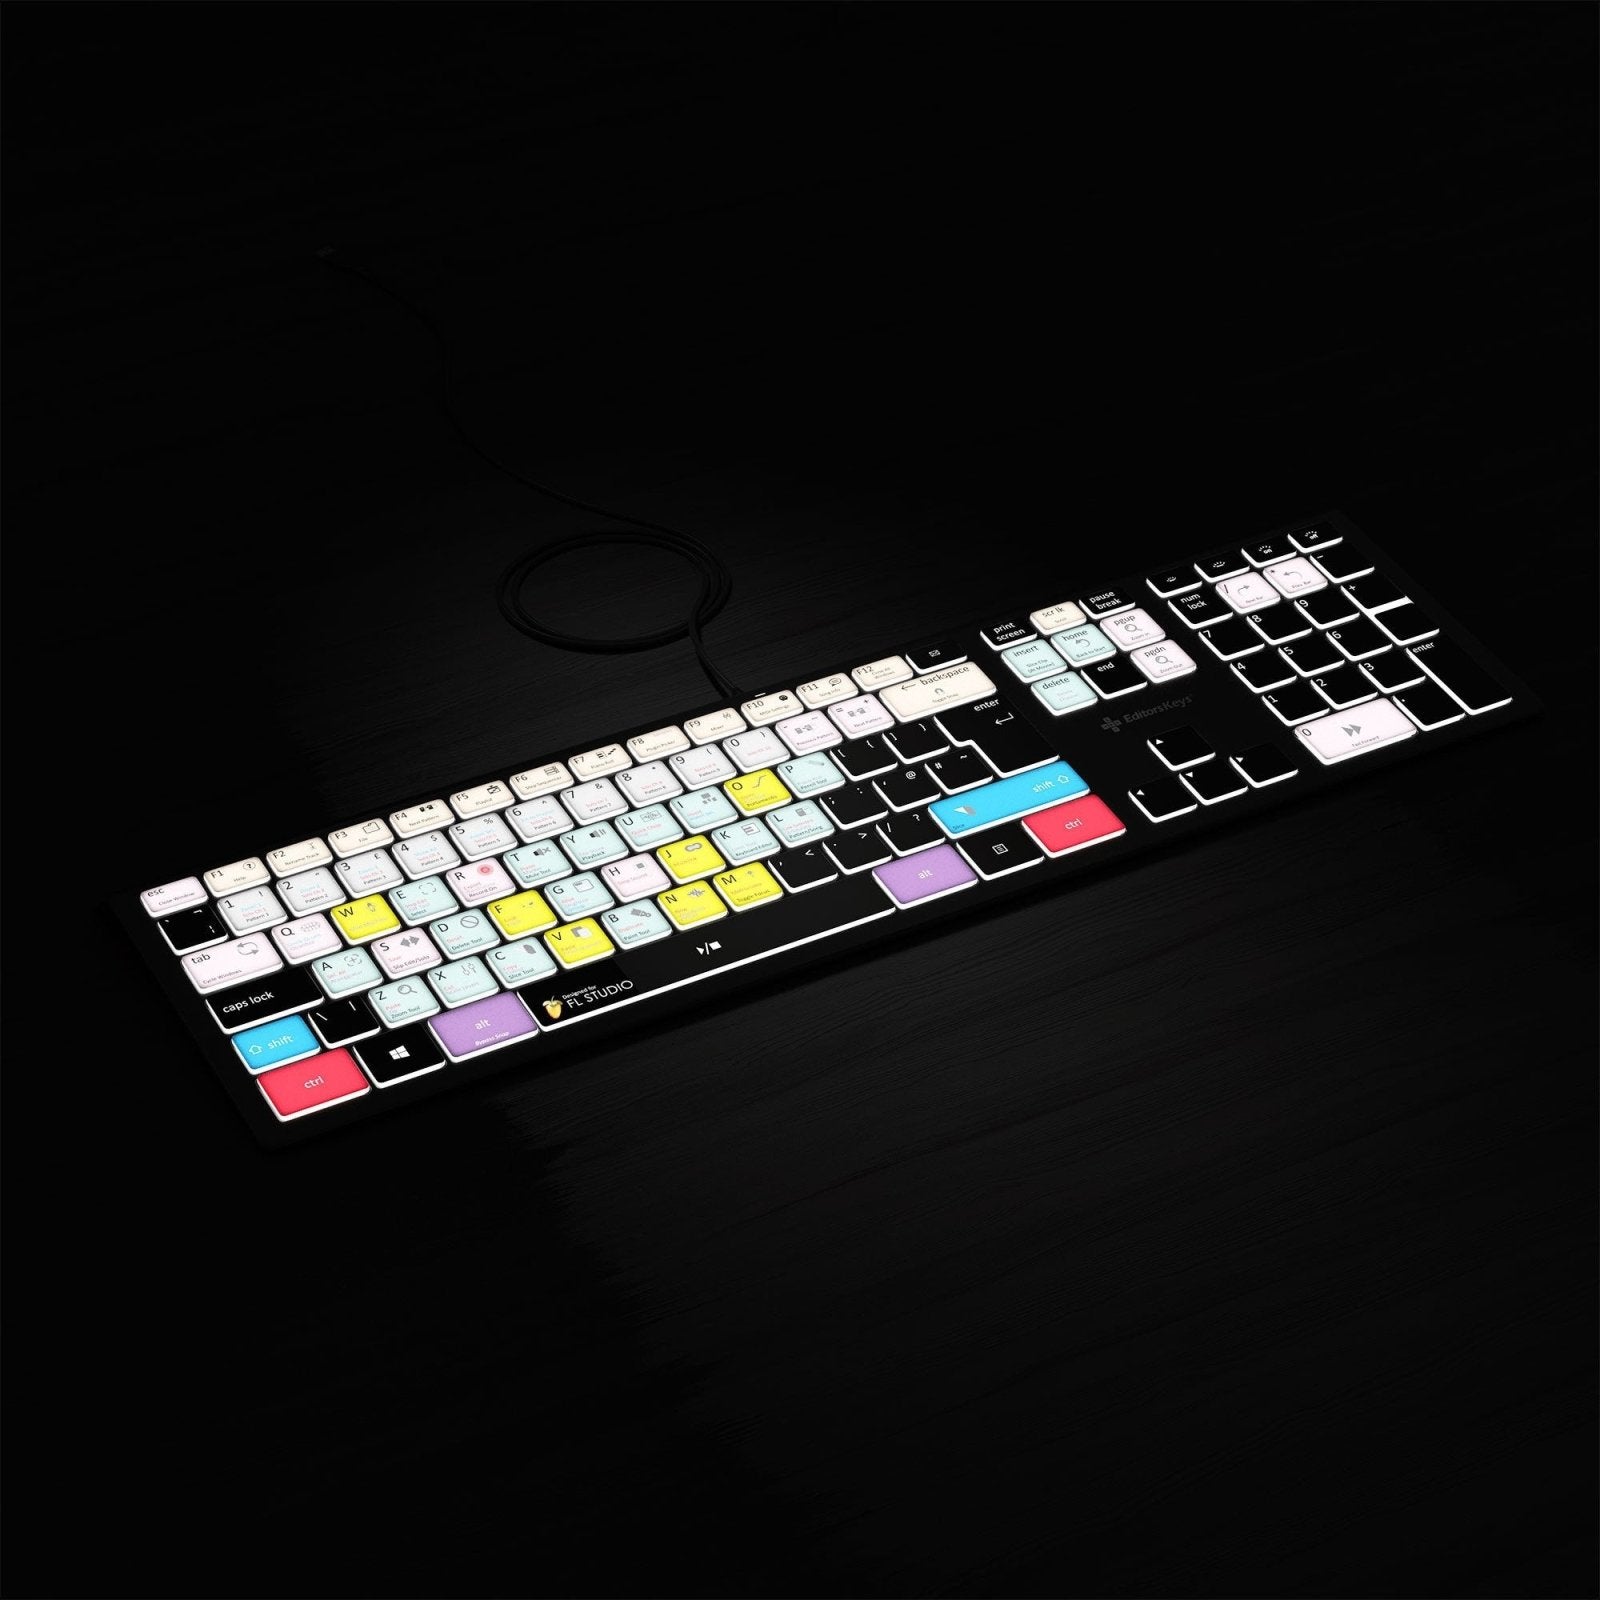 FL Studio Keyboard - Backlit - For Mac or PC - Editors Keys